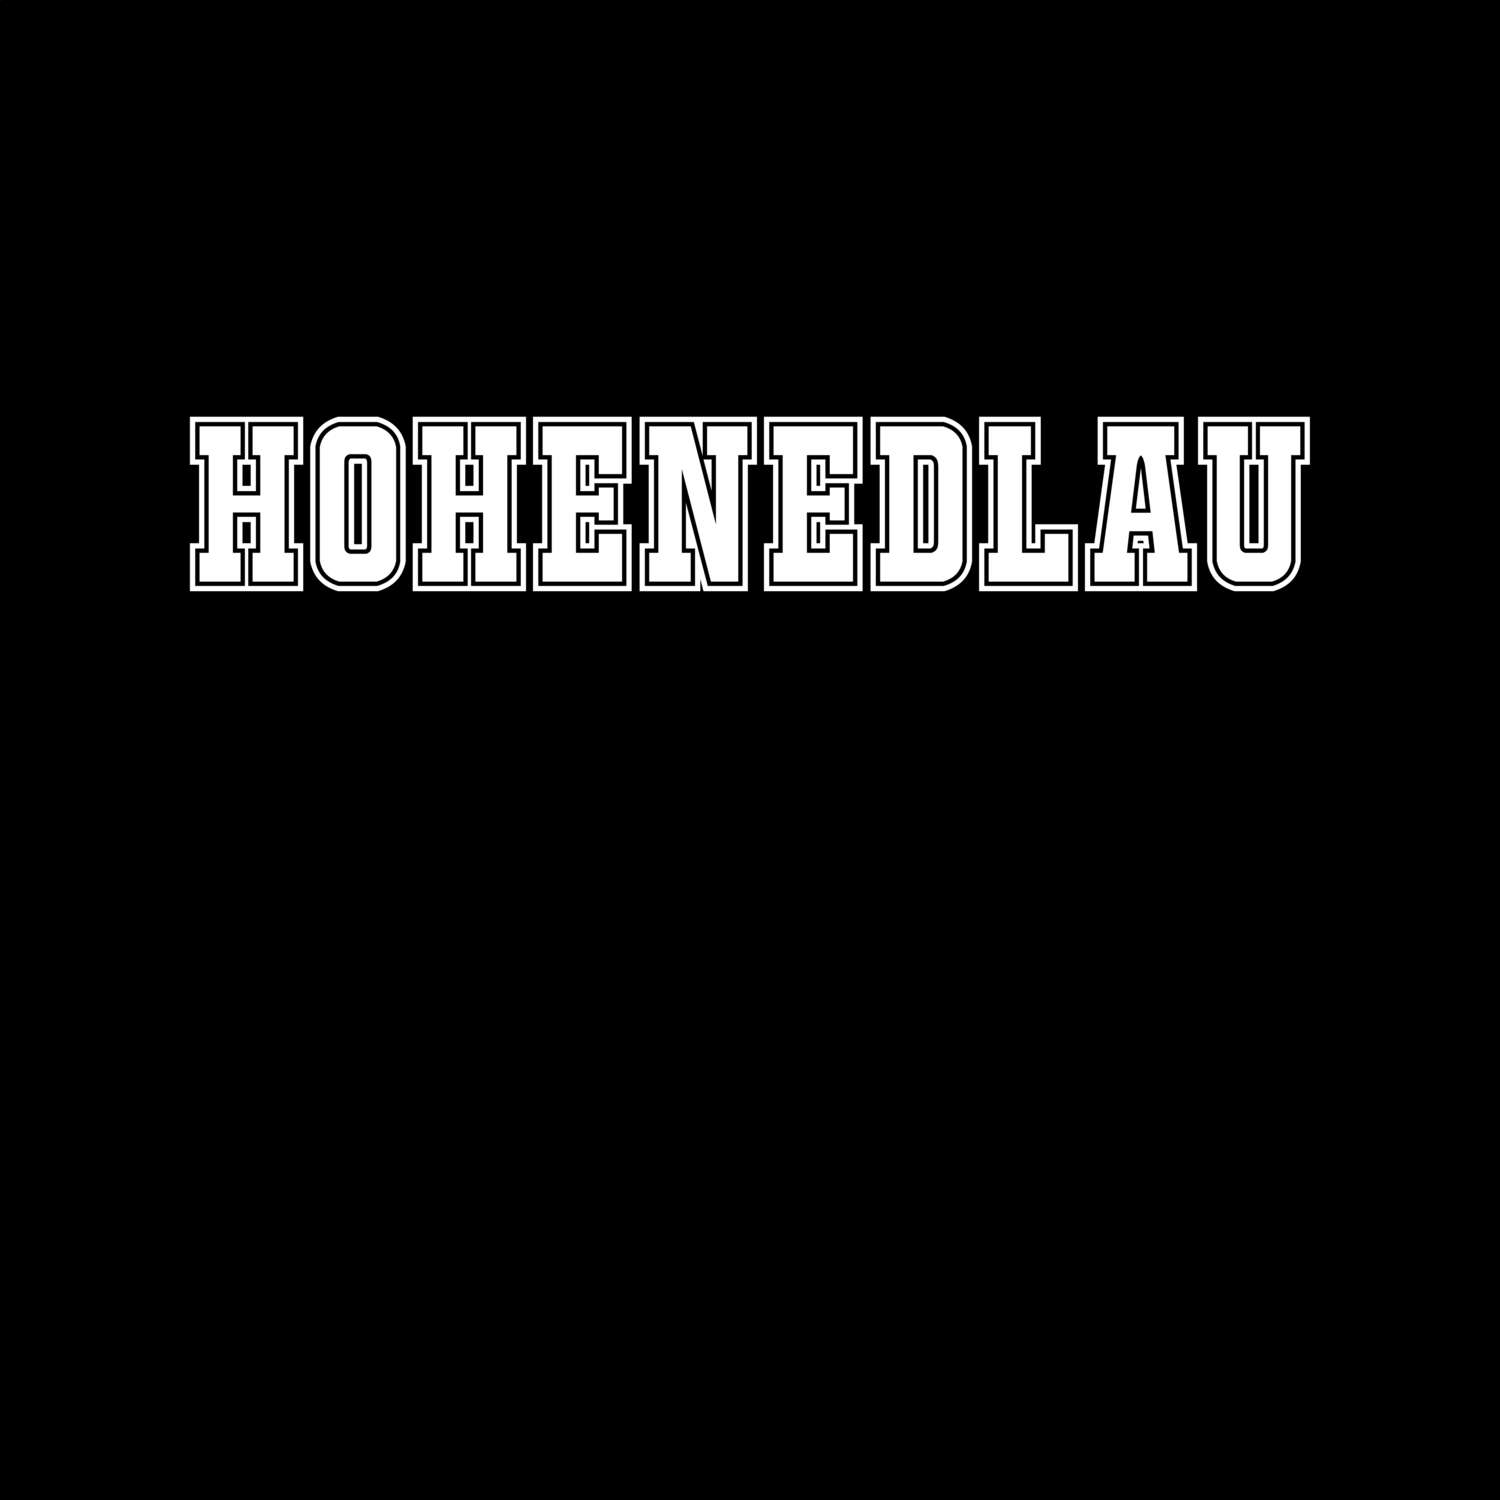 Hohenedlau T-Shirt »Classic«